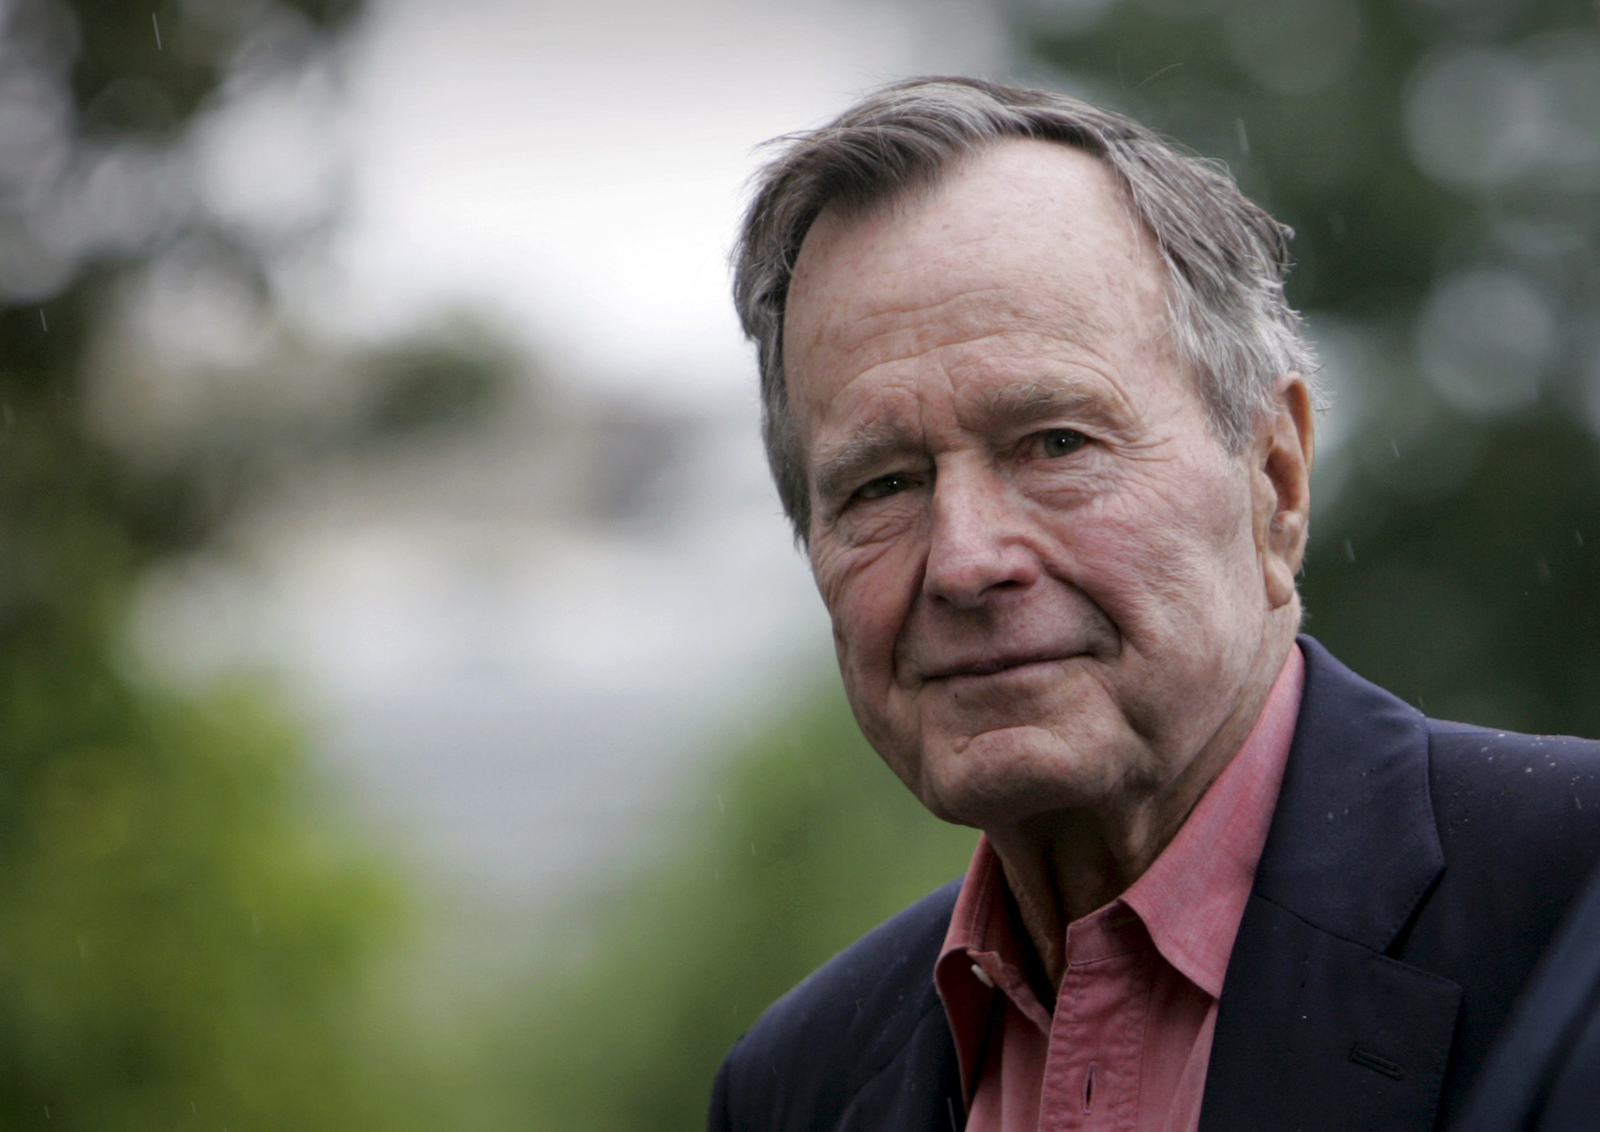 De luto. El expresidente George Herbert Walker Bush, quien encabezó la Guerra del Golfo Pérsico, murió anoche.